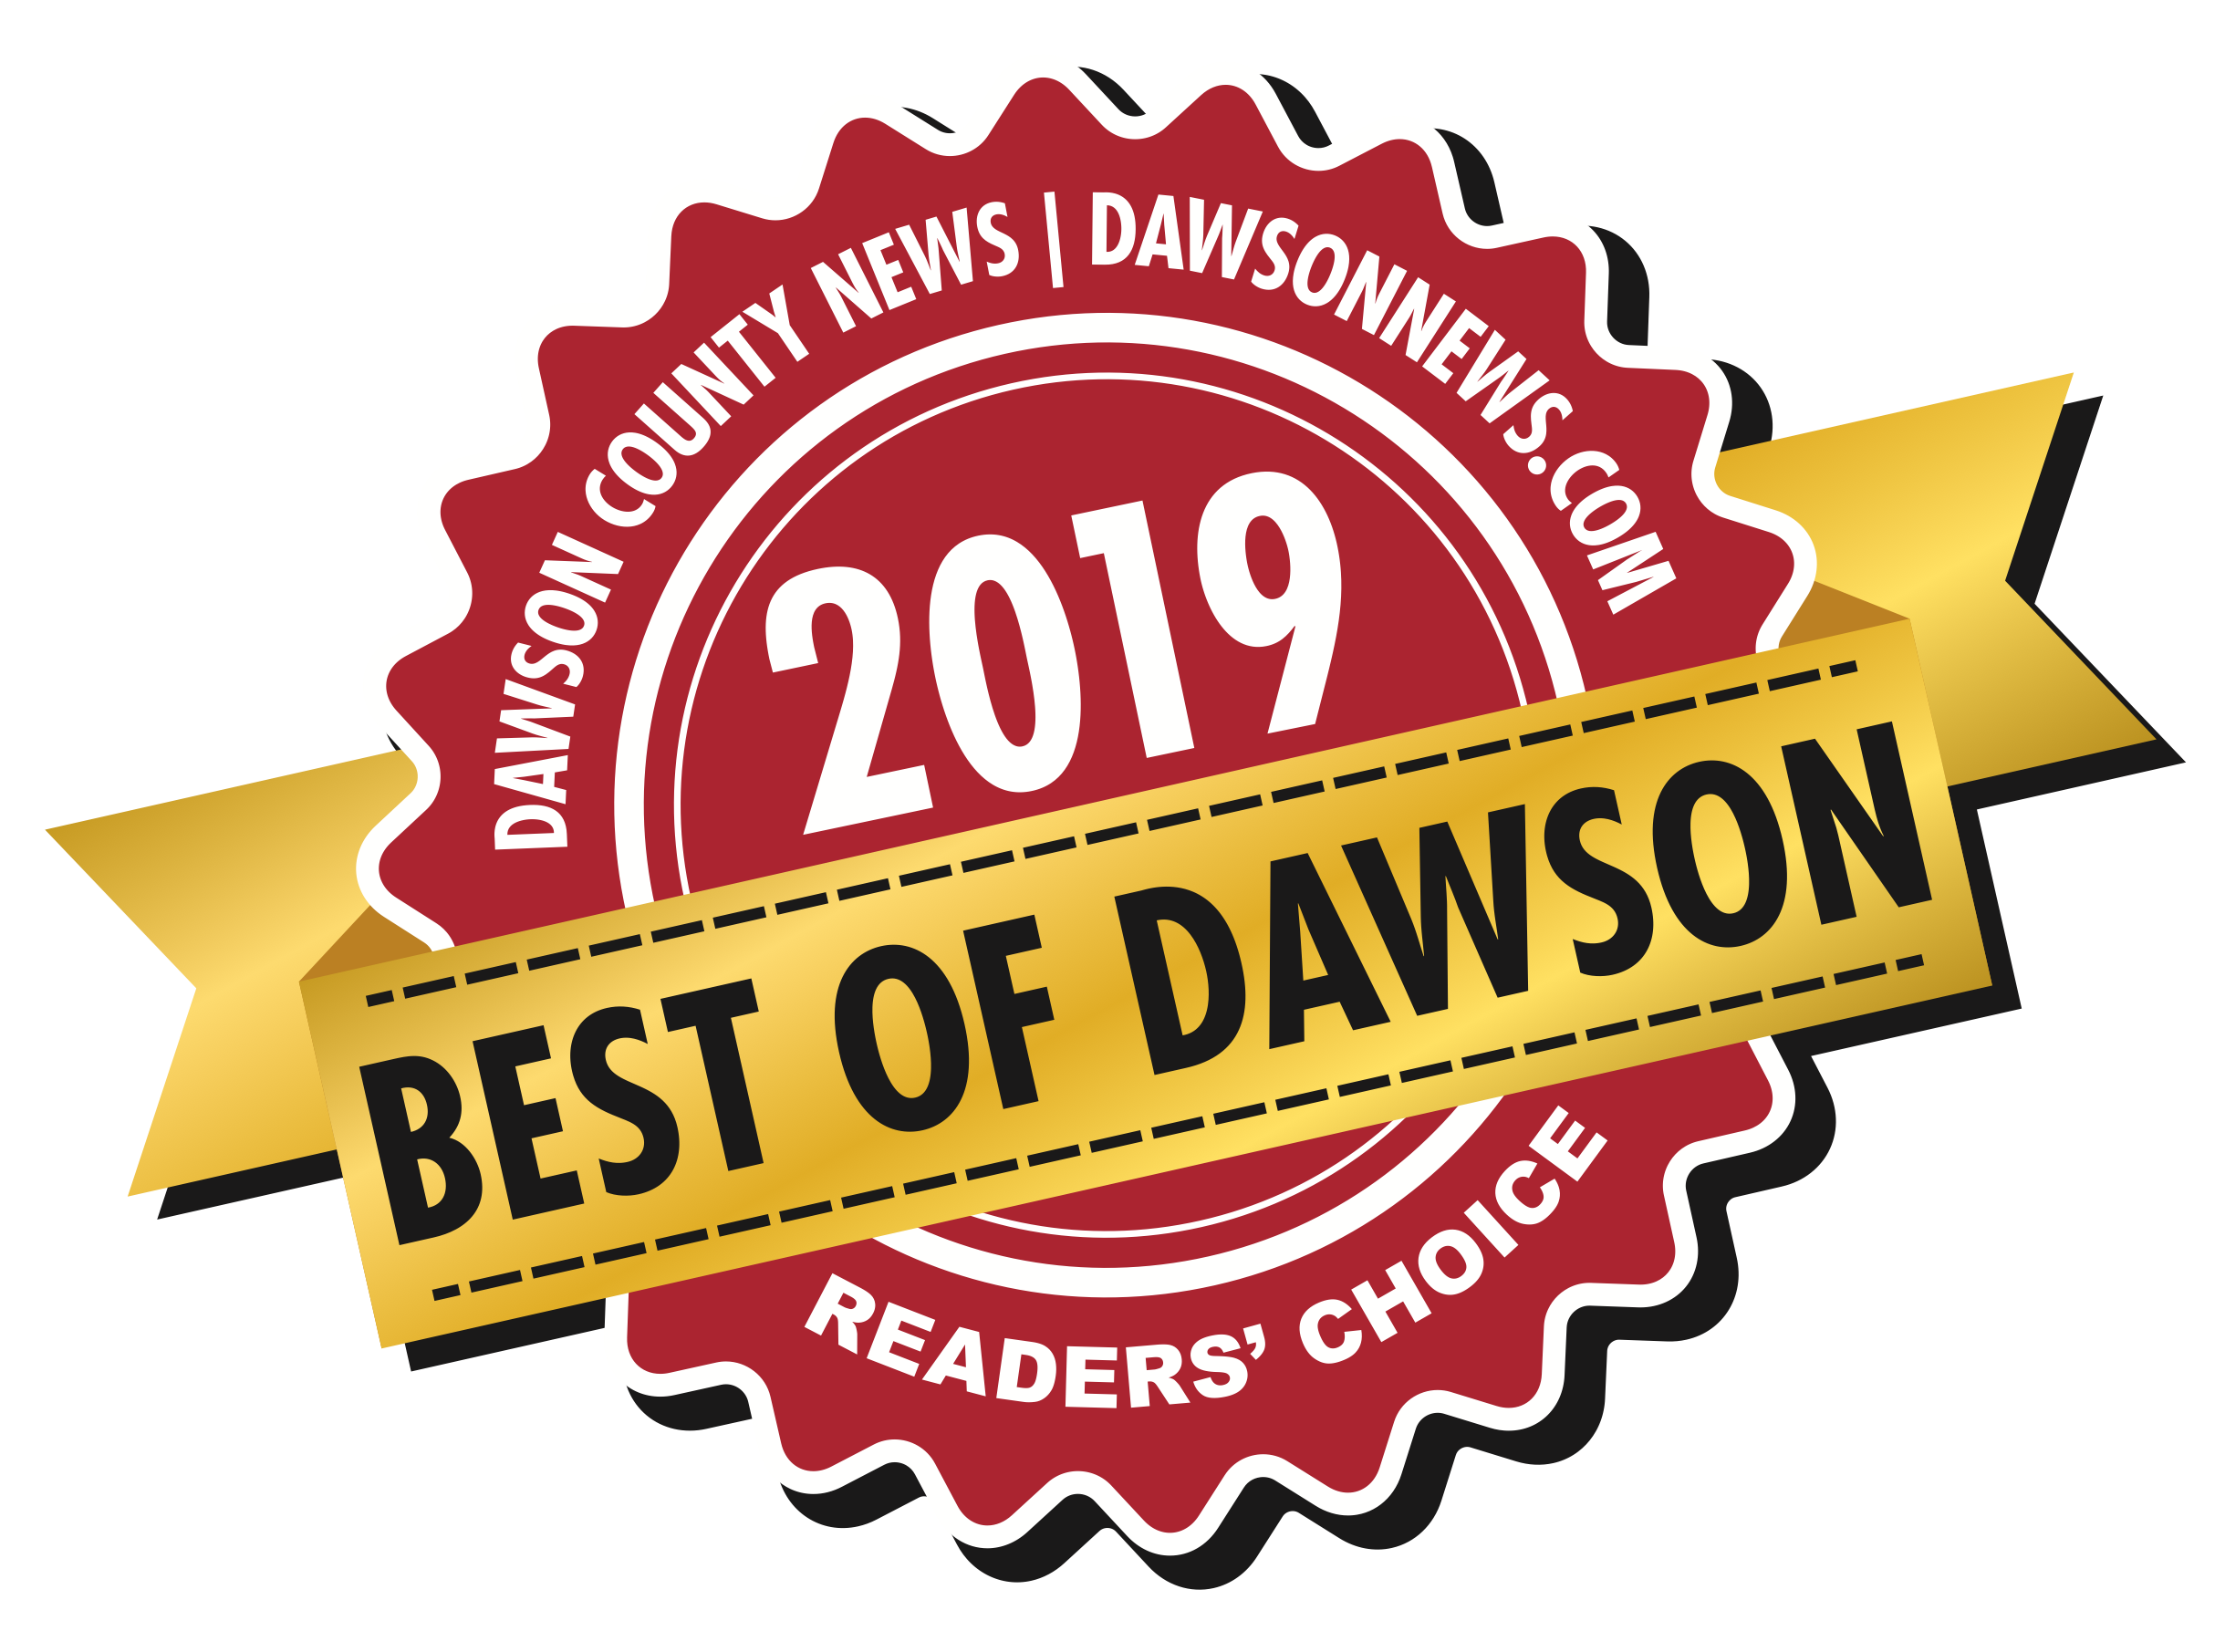 Best of Dawson 2019 logo